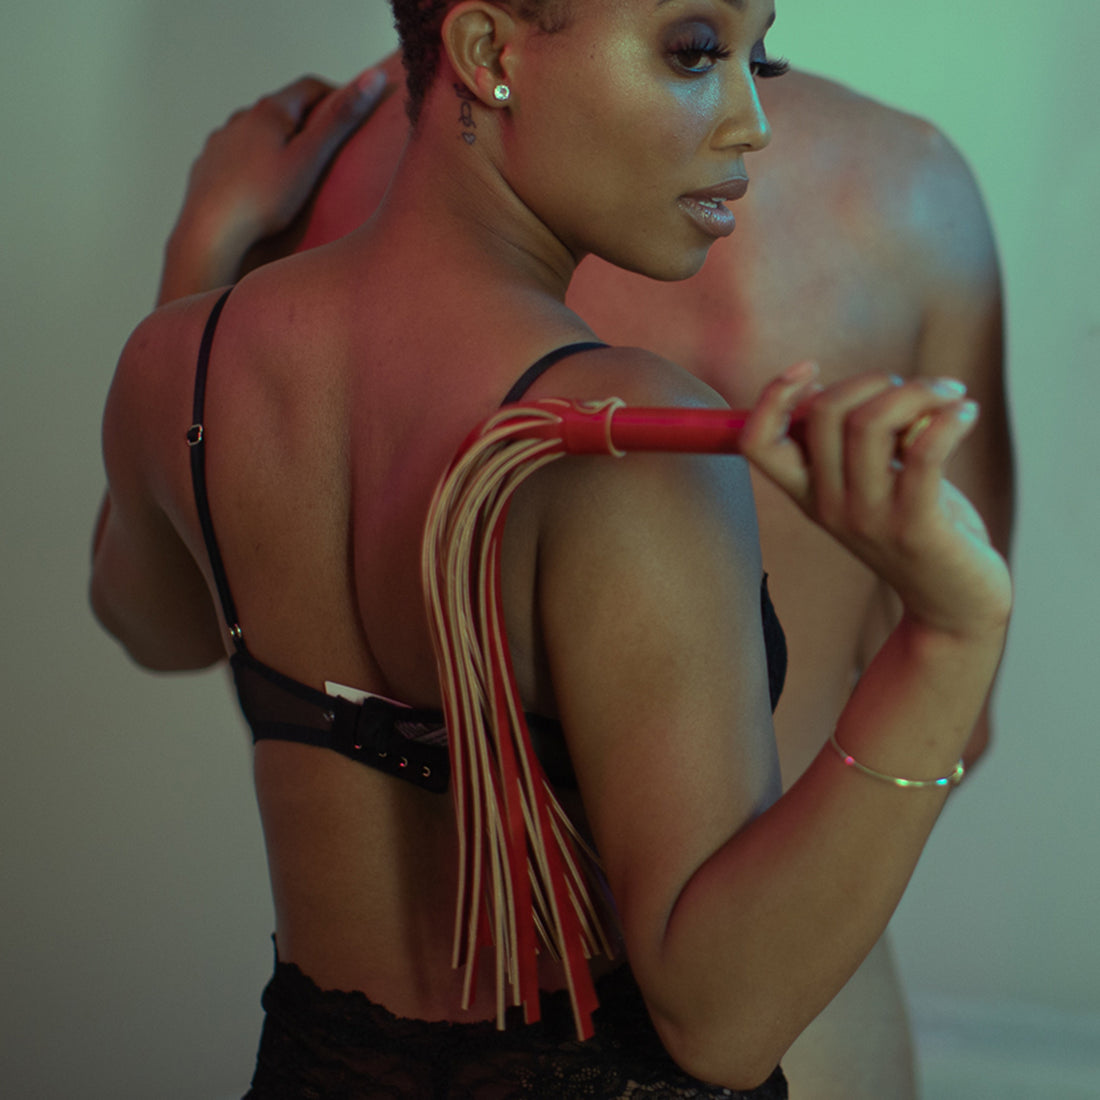 Woman holding vegan leather bondage whip behind her back